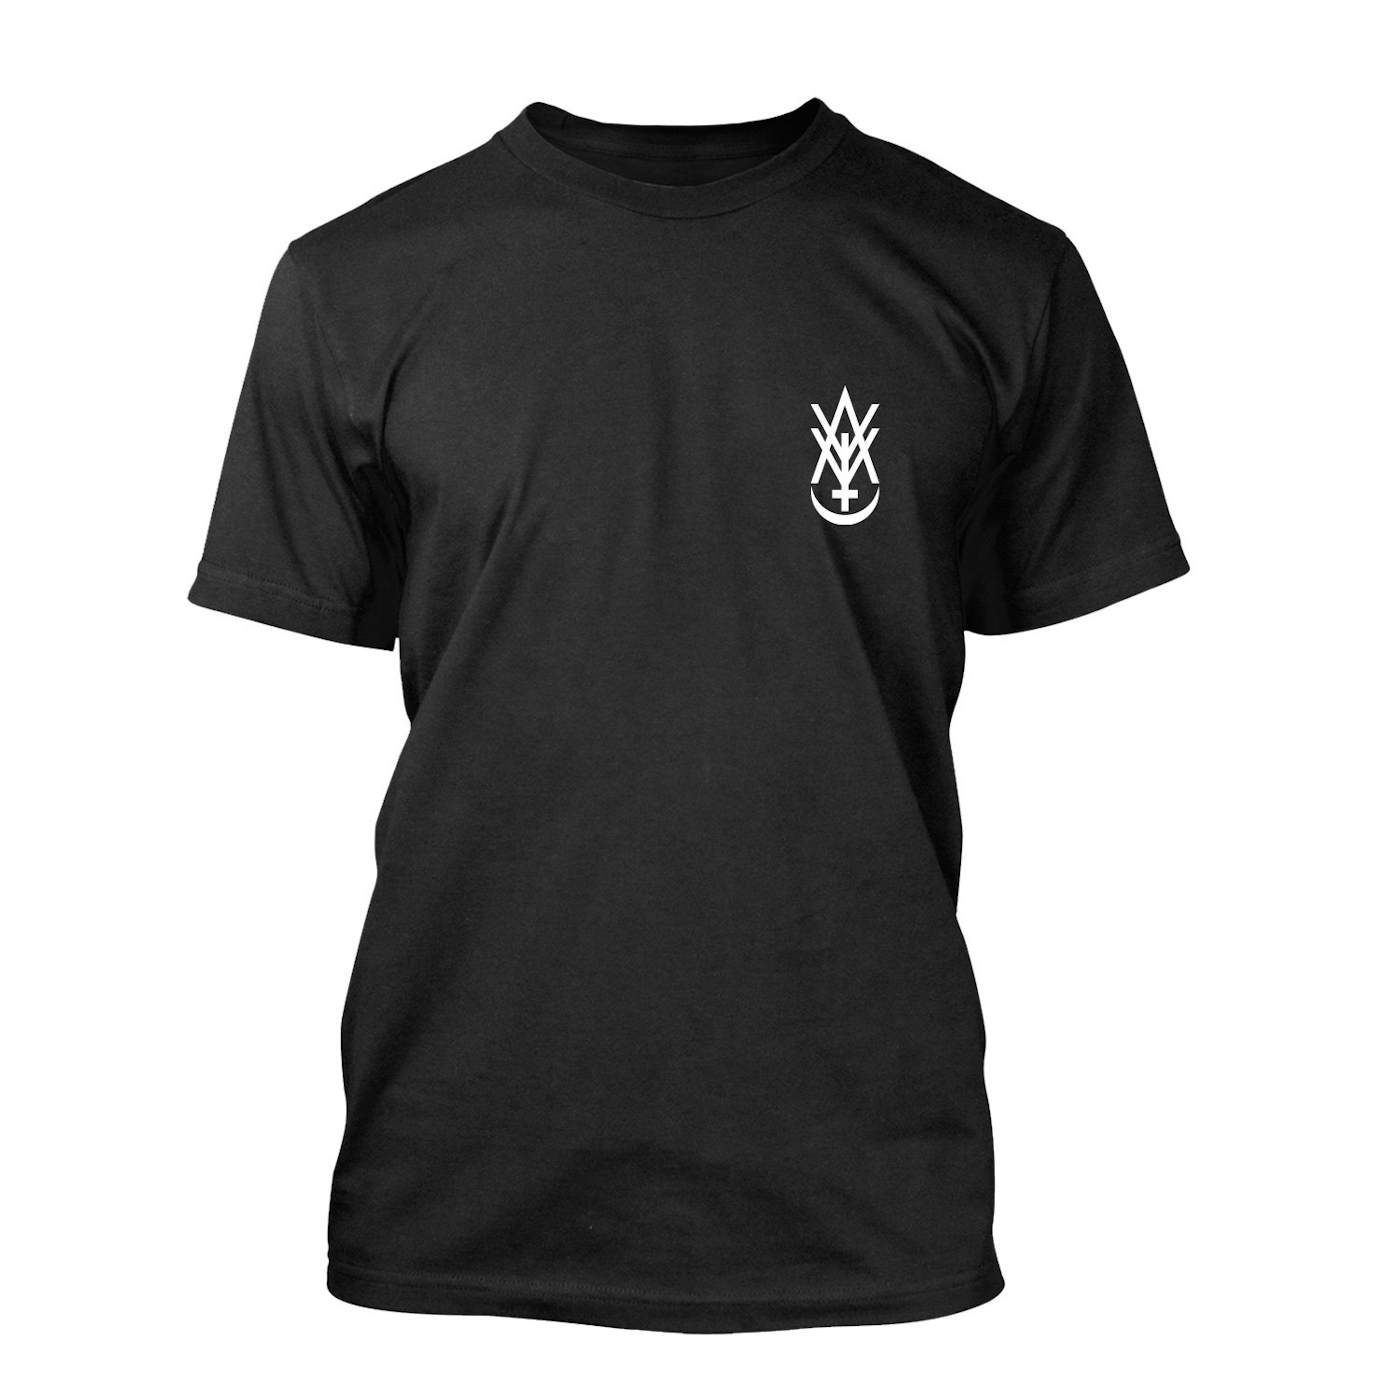 Amigo The Devil "Death's Laboratory" T-Shirt